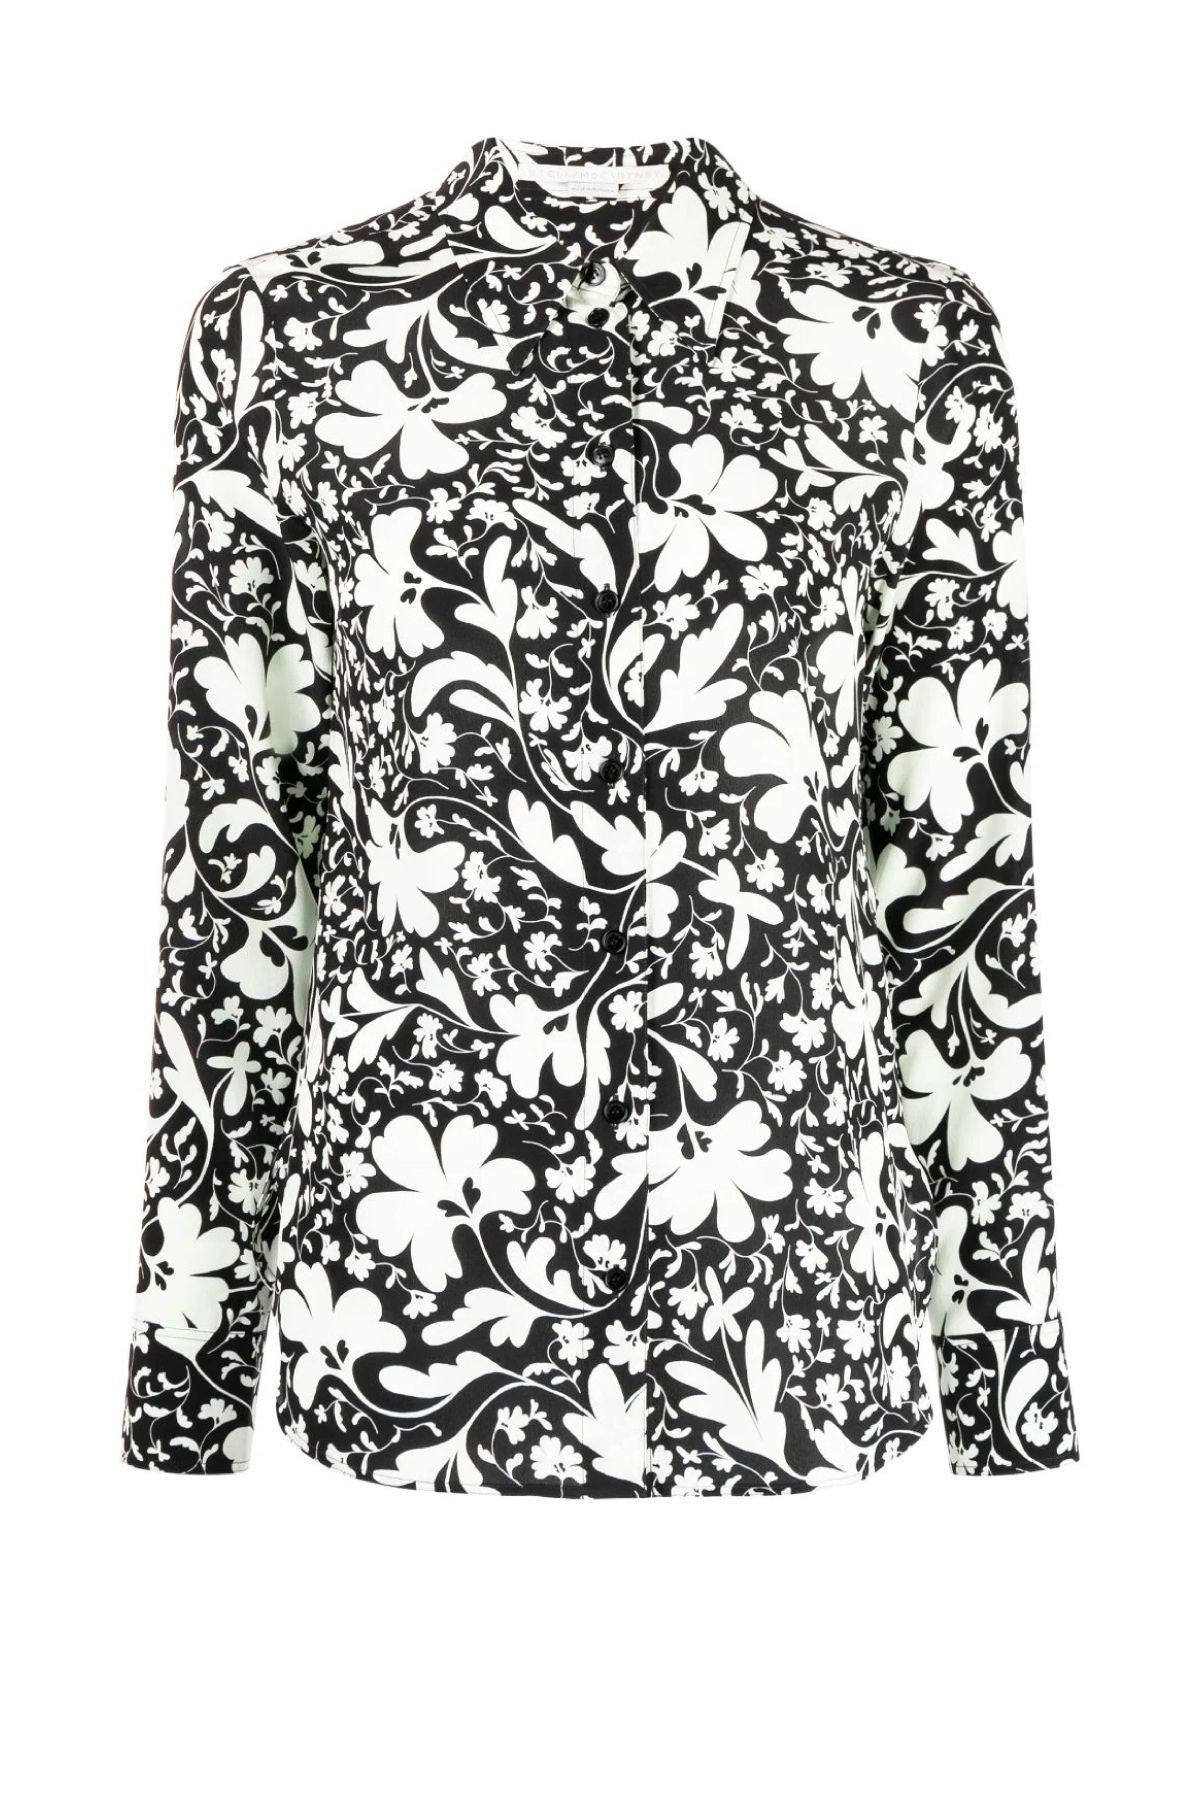 Stella McCartney Floral Print Silk Shirt - Multi Black